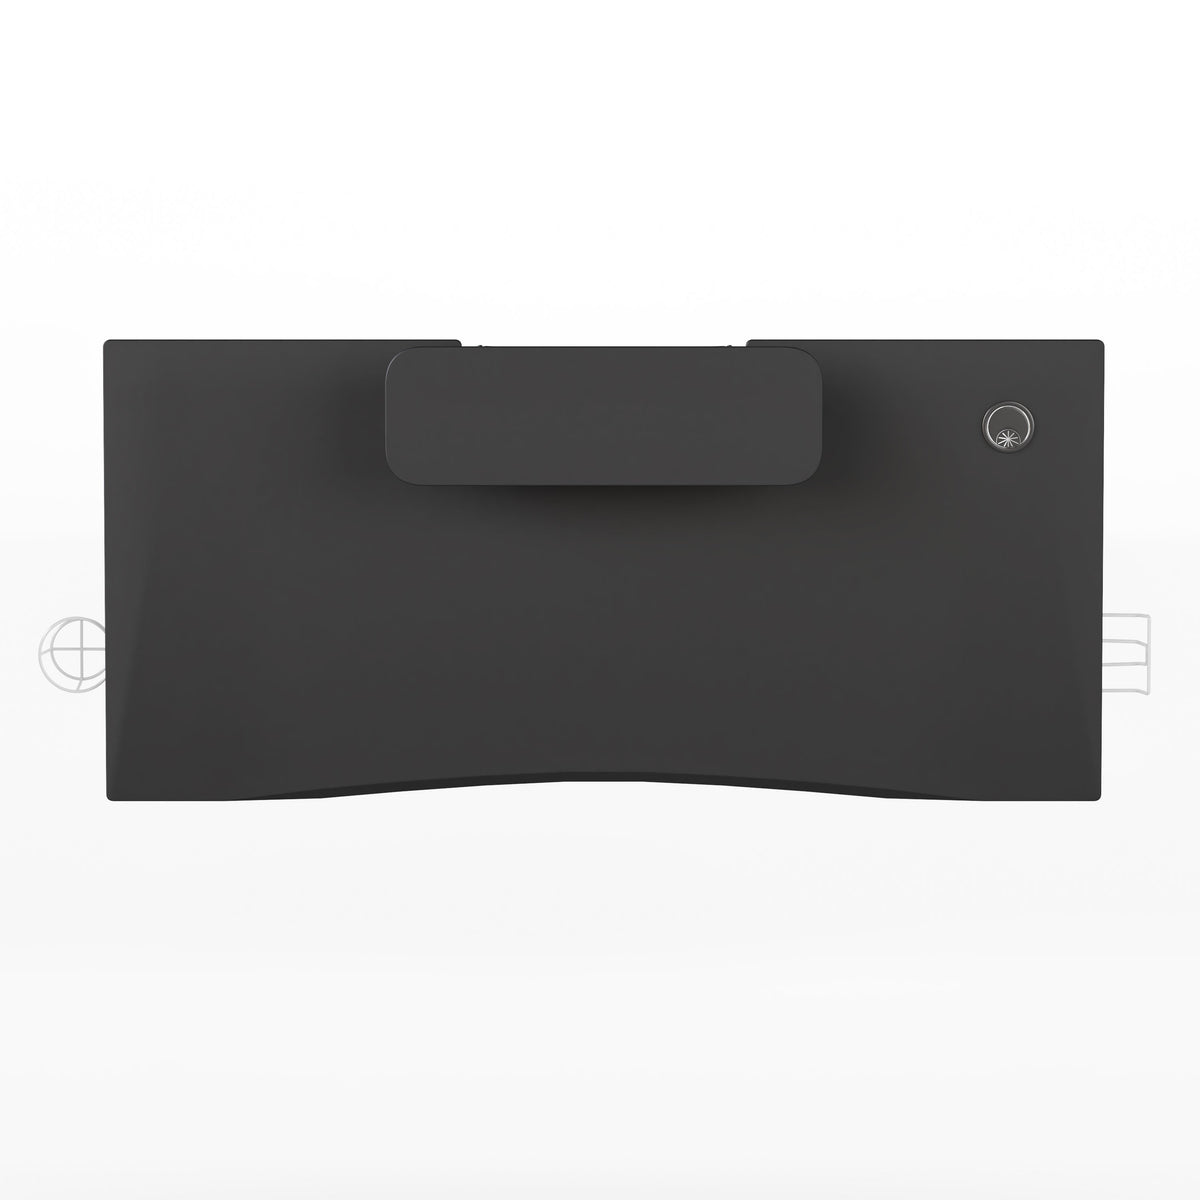 Black Top/White Frame |#| Black/White Gaming Desk - Cup Holder, Headphone Hook, Monitor/Smartphone Stand